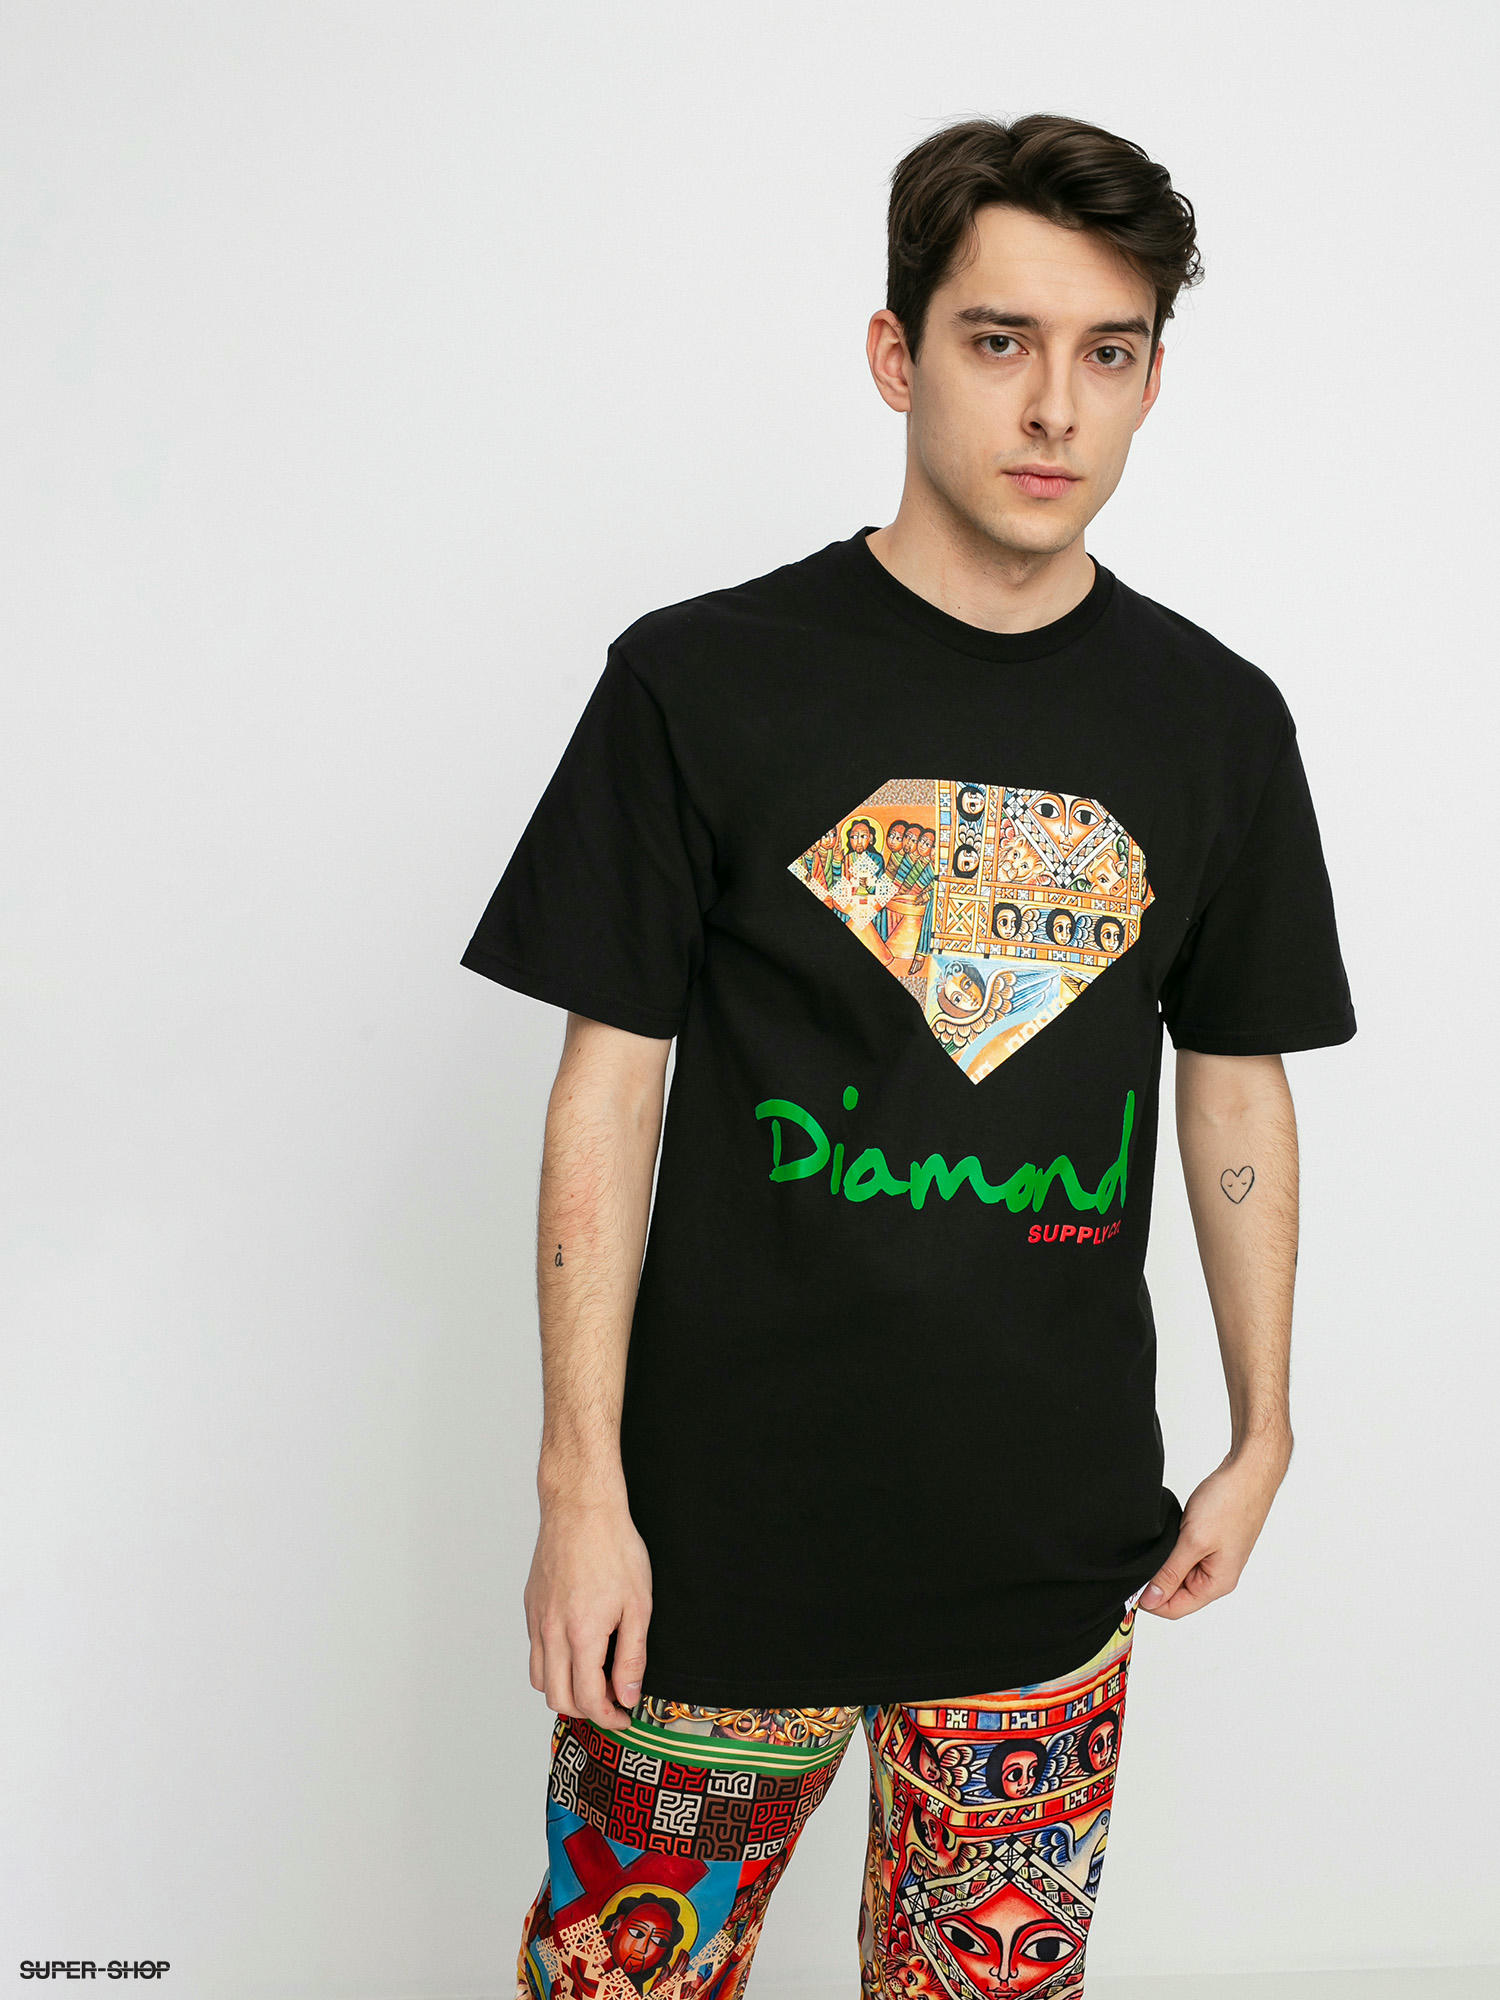 Diamond Supply Co. T-shirt (black)